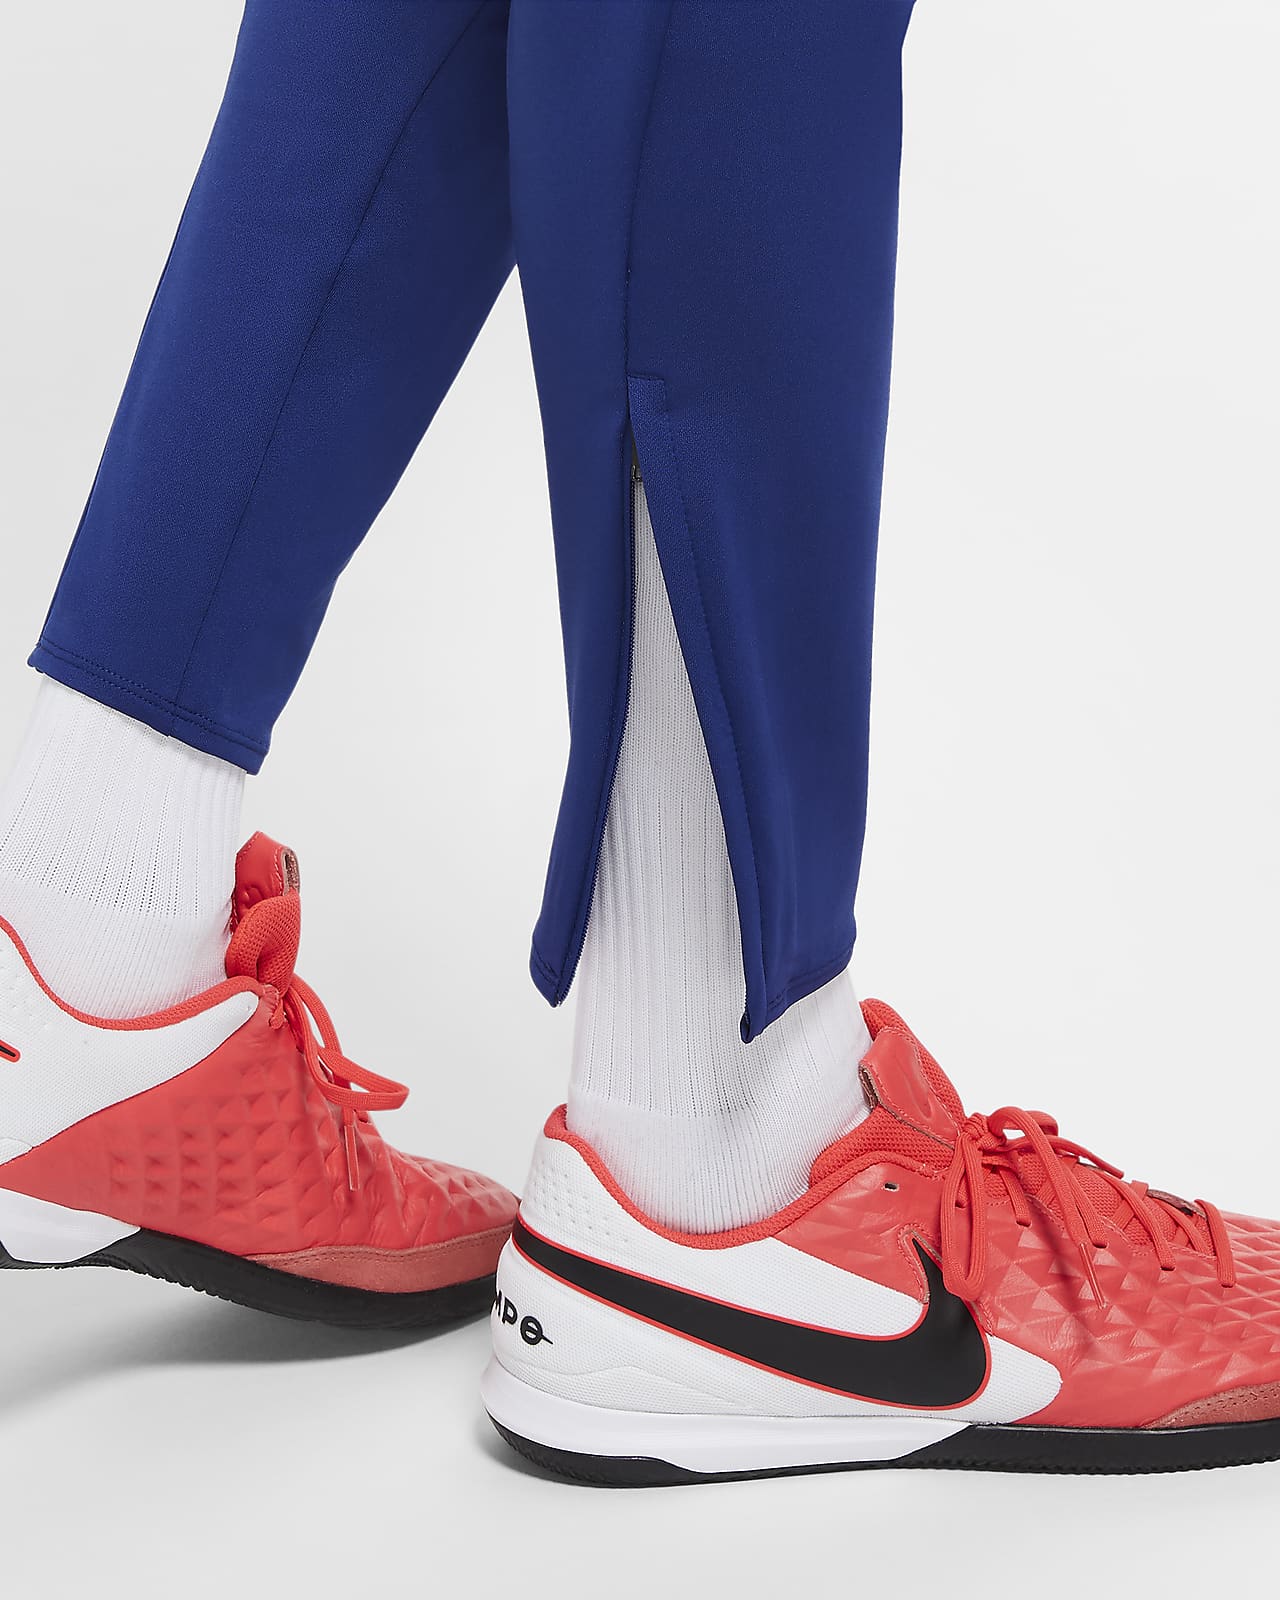  Nike Dri-FIT Strike Women's Soccer Pants, Mystic Navy